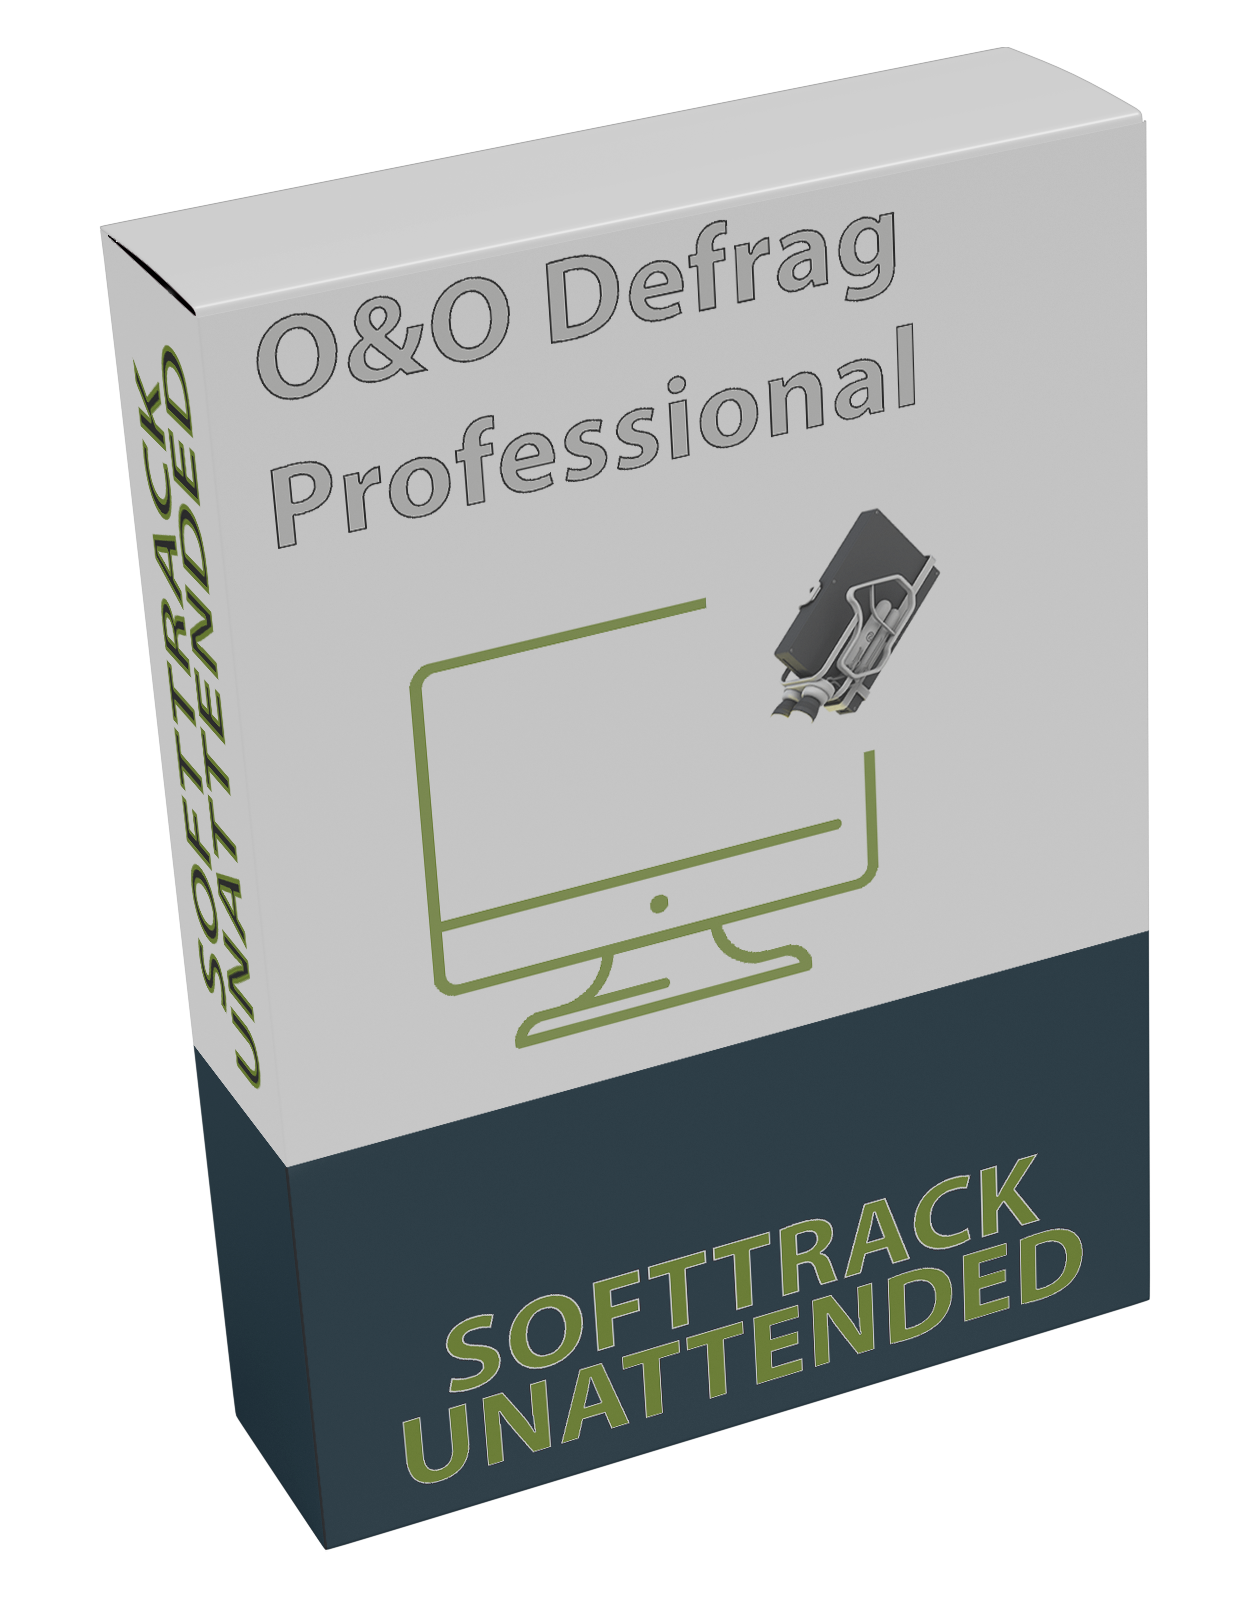 O&O Defrag Professional 26.0.7641 UNATTENDED